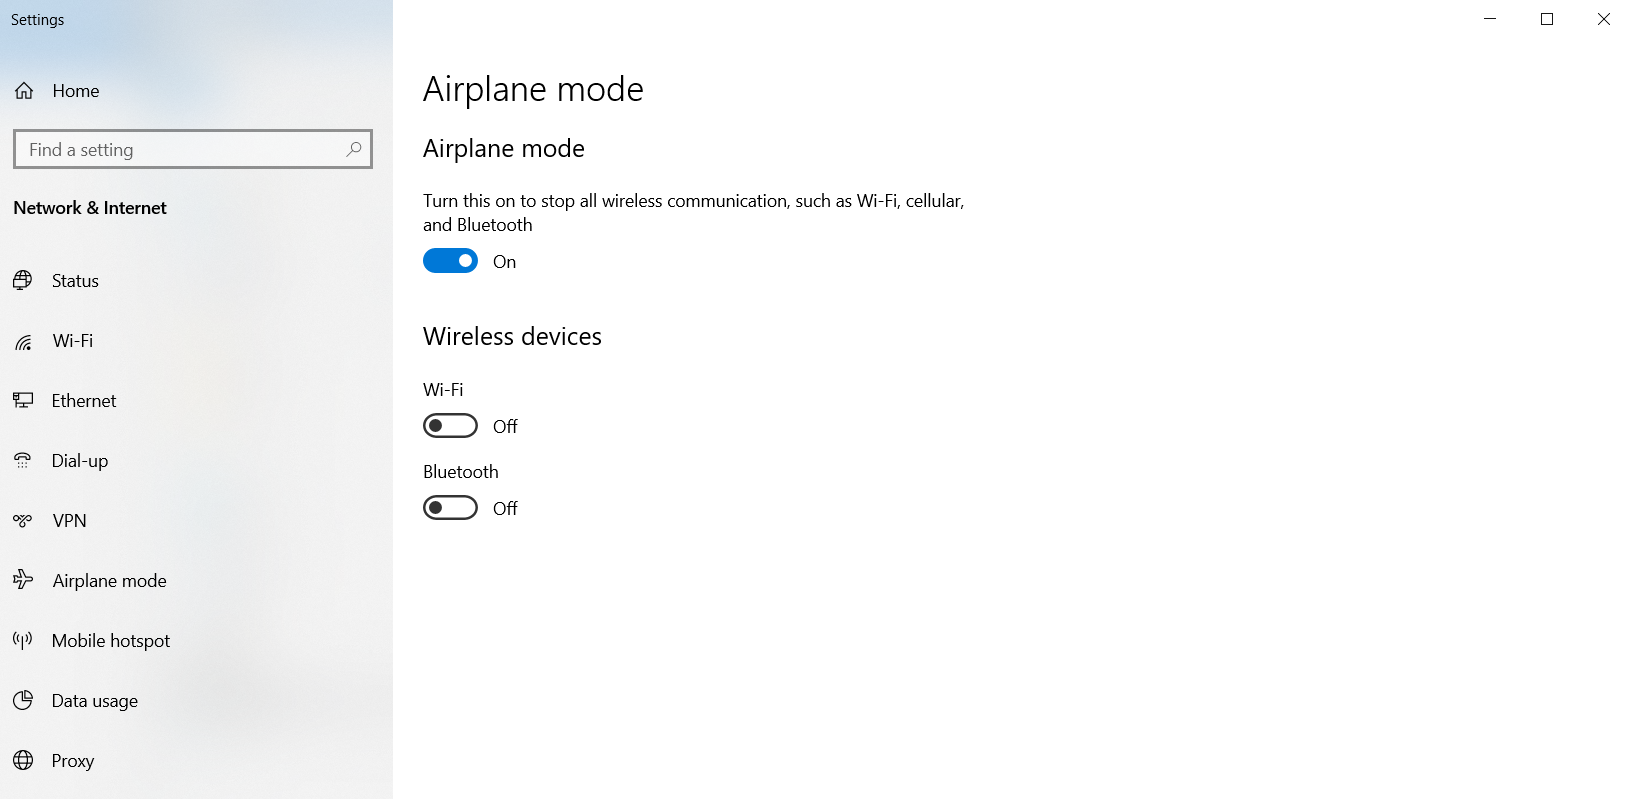 Airplane mode in the Network & Internet menu.